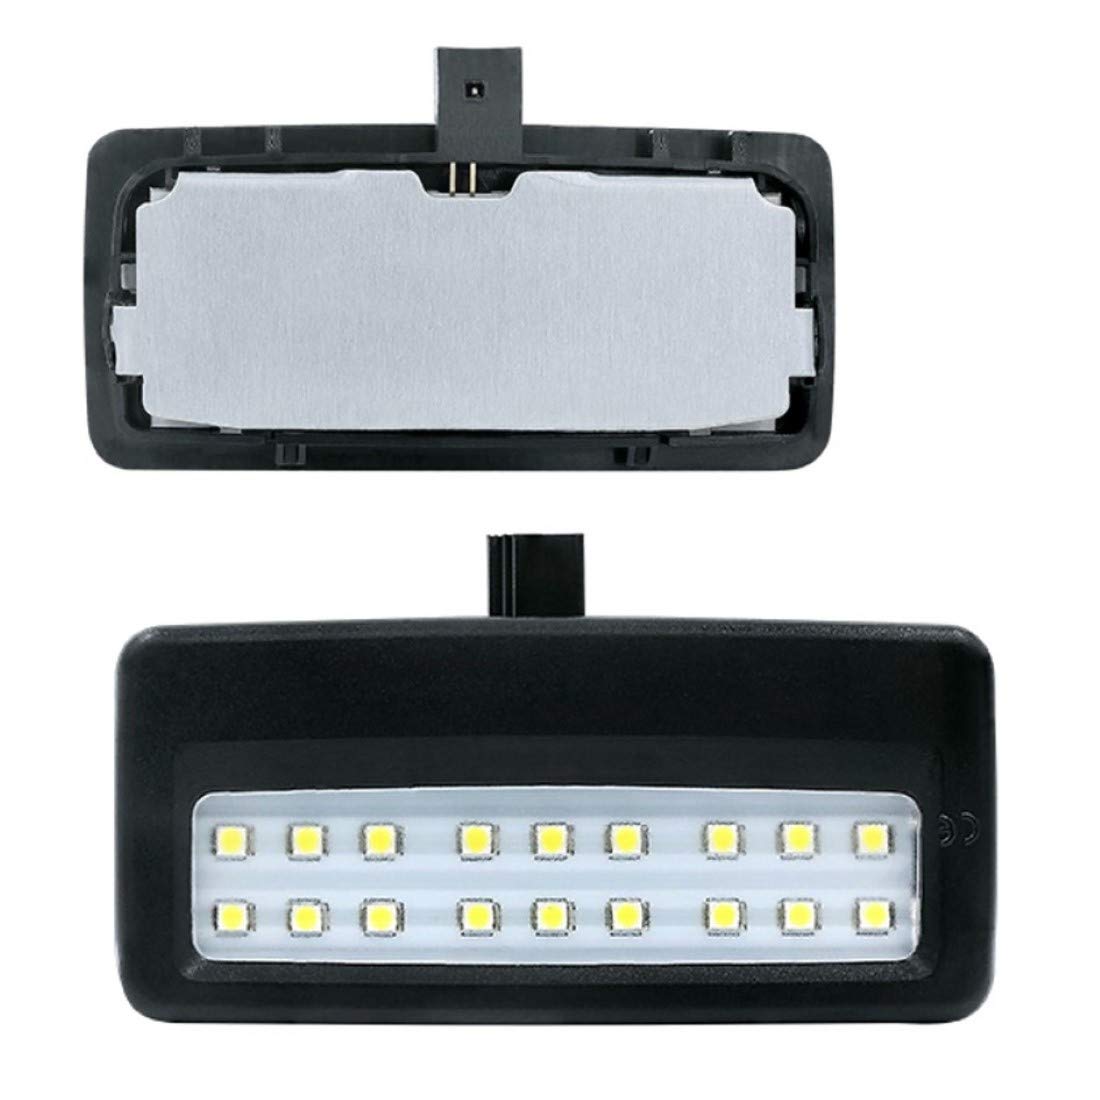 Do!LED A11S LED SMD Make Up Spiegel Schminkspiegel Beleuchtung Plug & Play Kalt Weiß - schwarzes Gehäuse von Do!LED